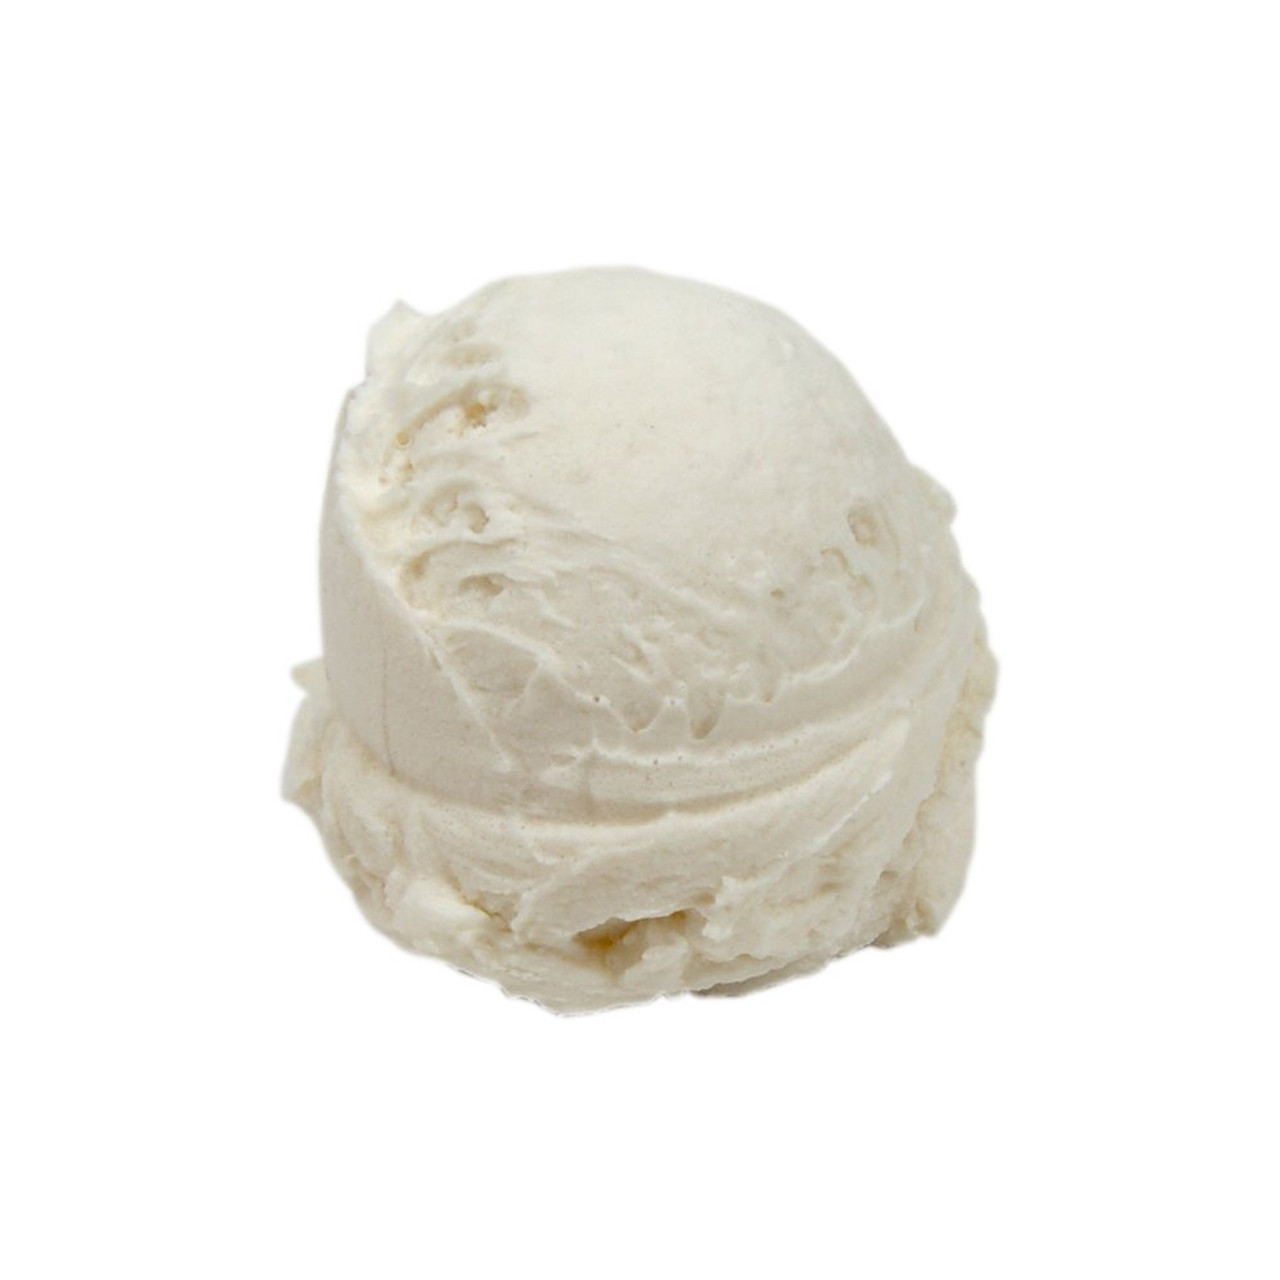 Fake Double Scoop Vanilla Ice Cream on Sugar Cone